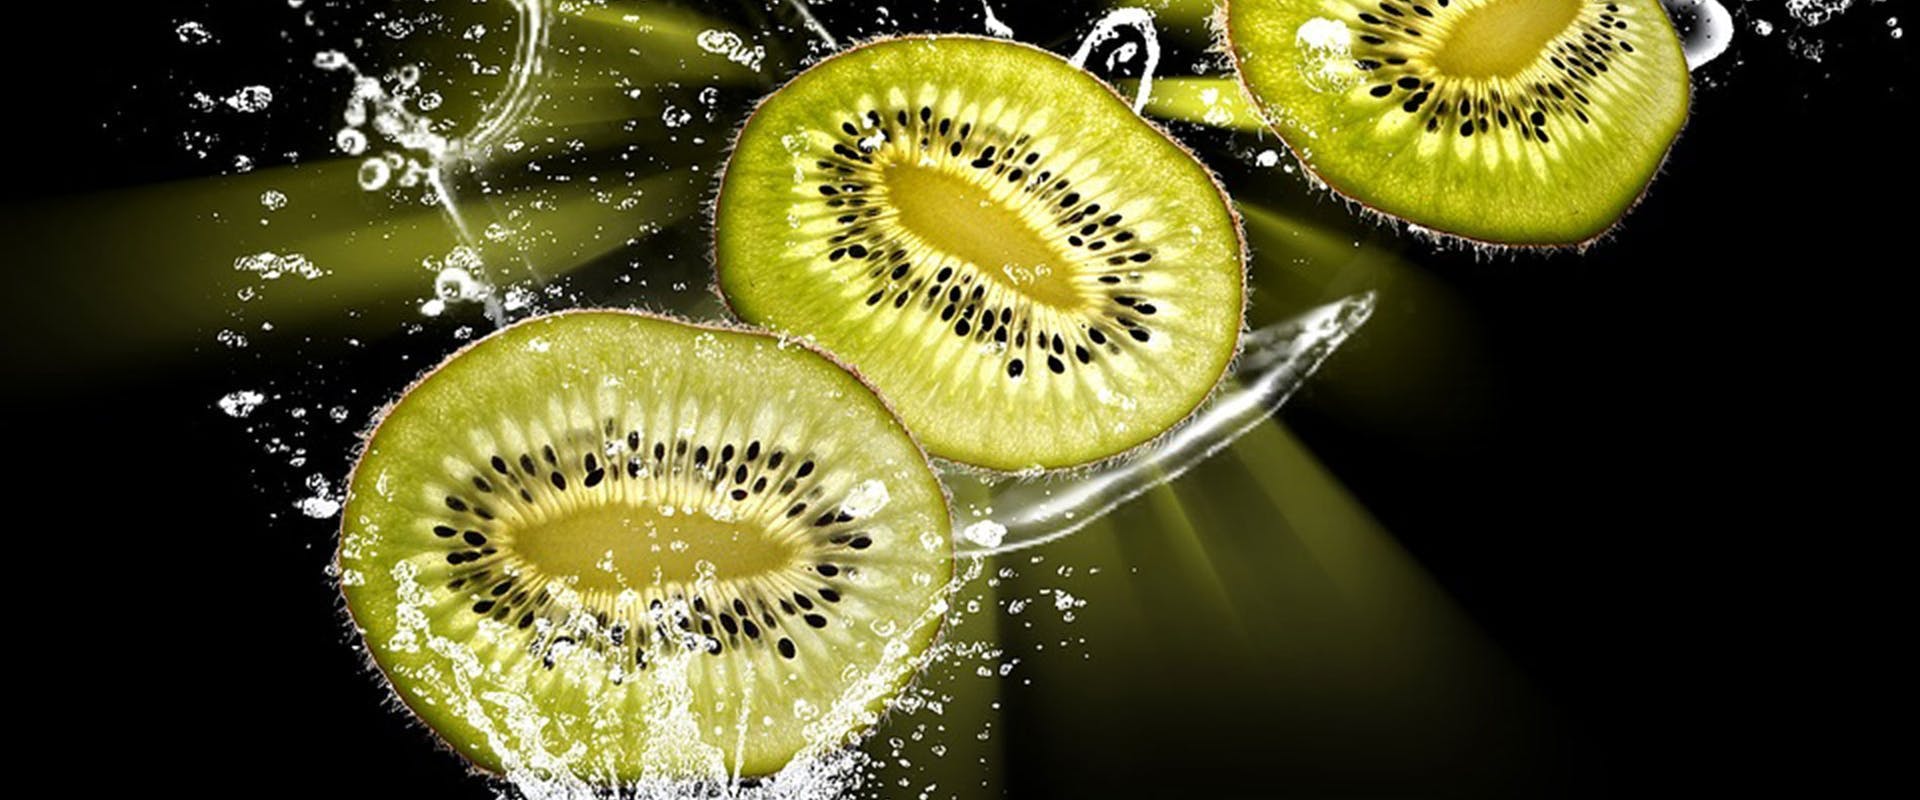 plant fruit food kiwi